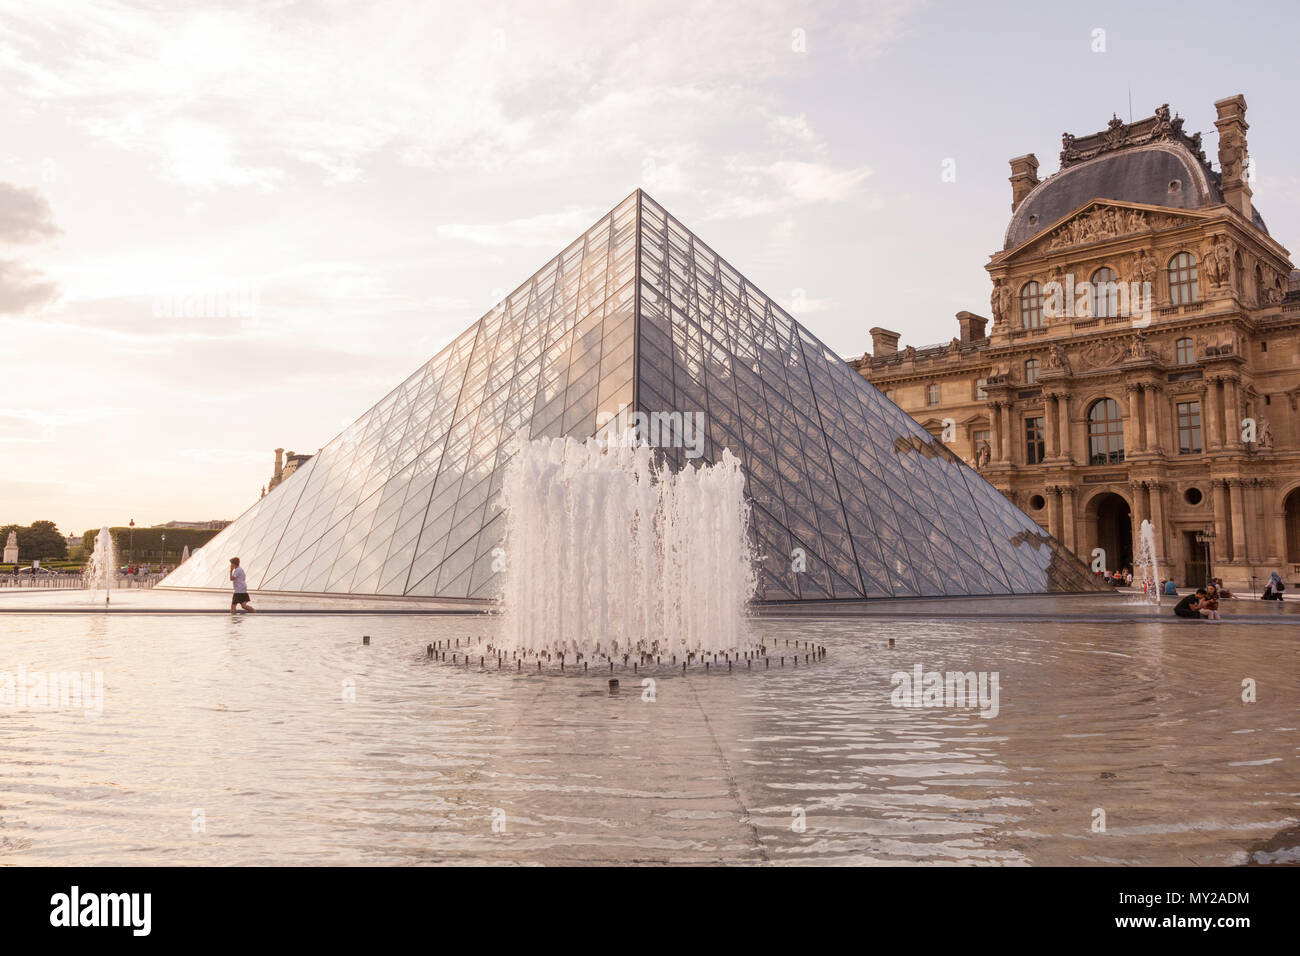 Museum du Louvre, Musée du Louvre and the glass pyramid, Paris, France, Europe. Stock Photo